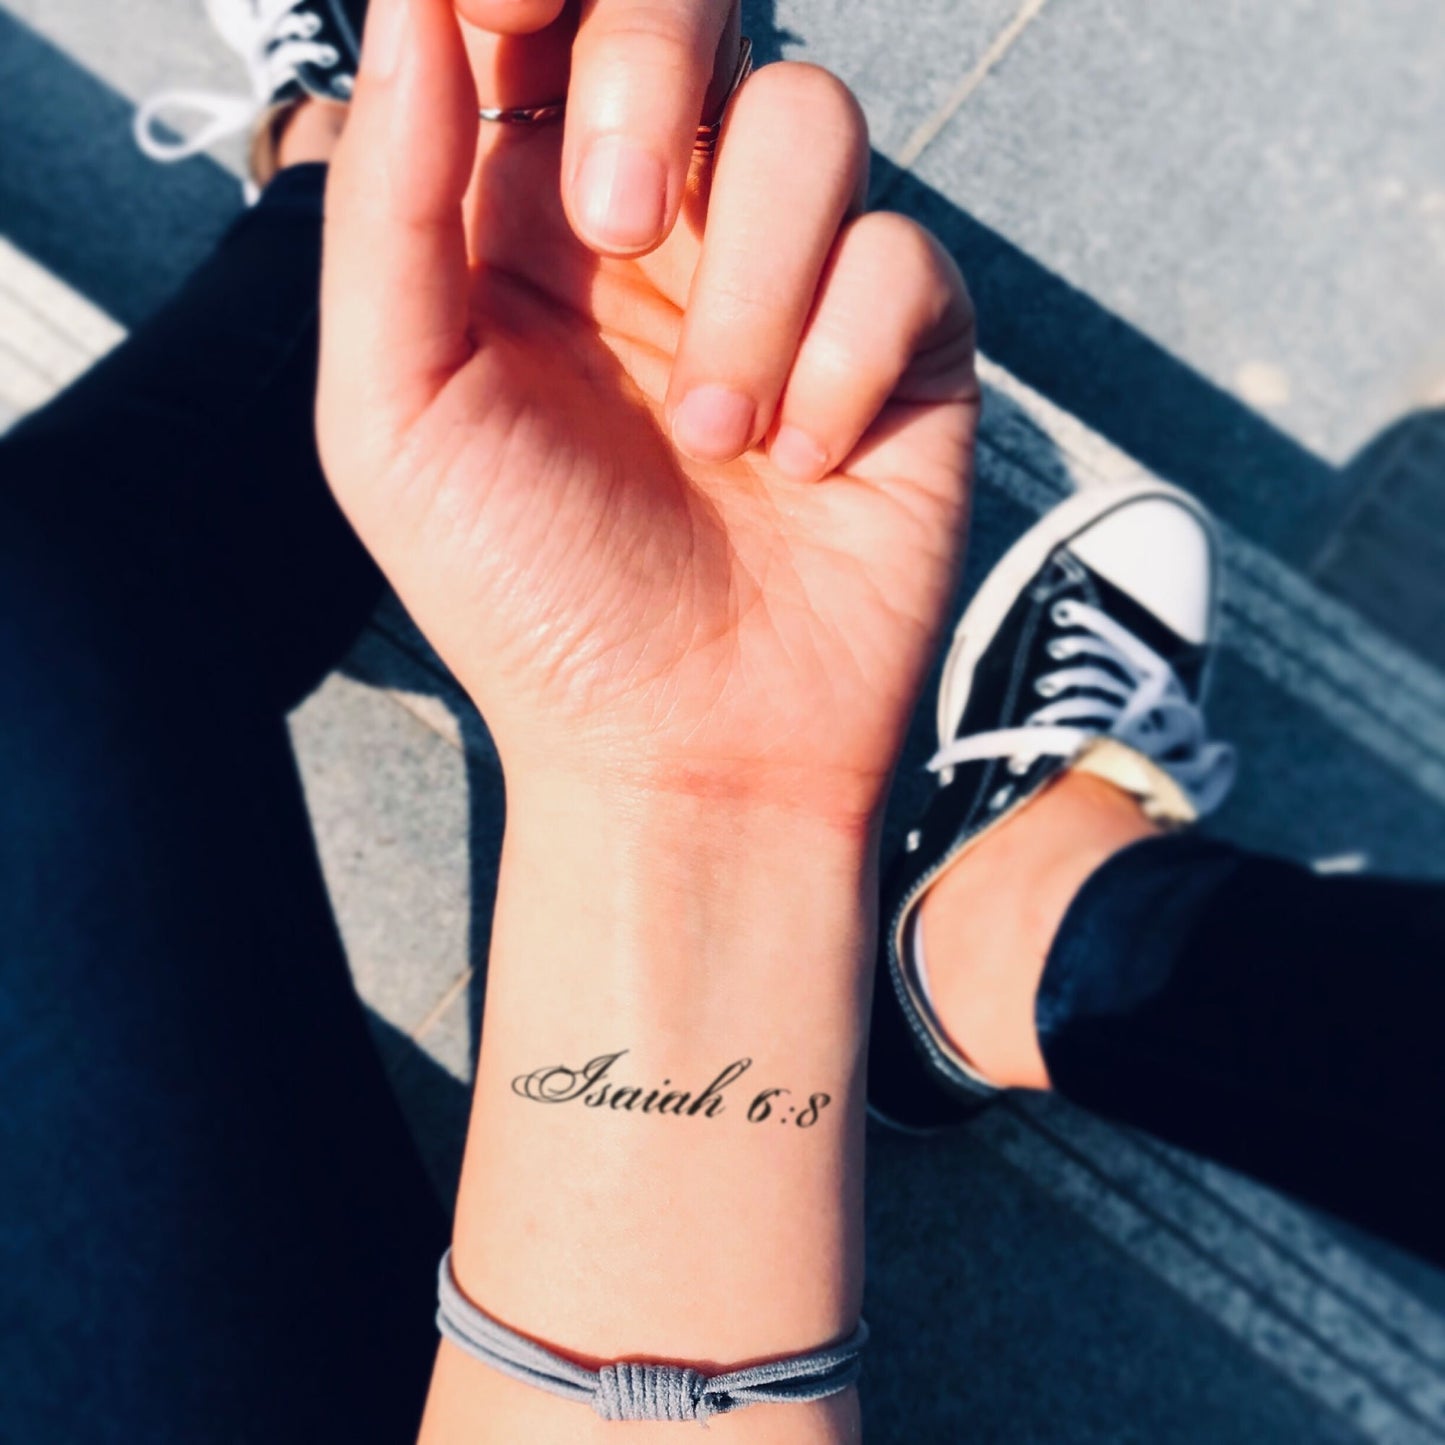 fake small isaiah 6:8 lettering temporary tattoo sticker design idea on wrist